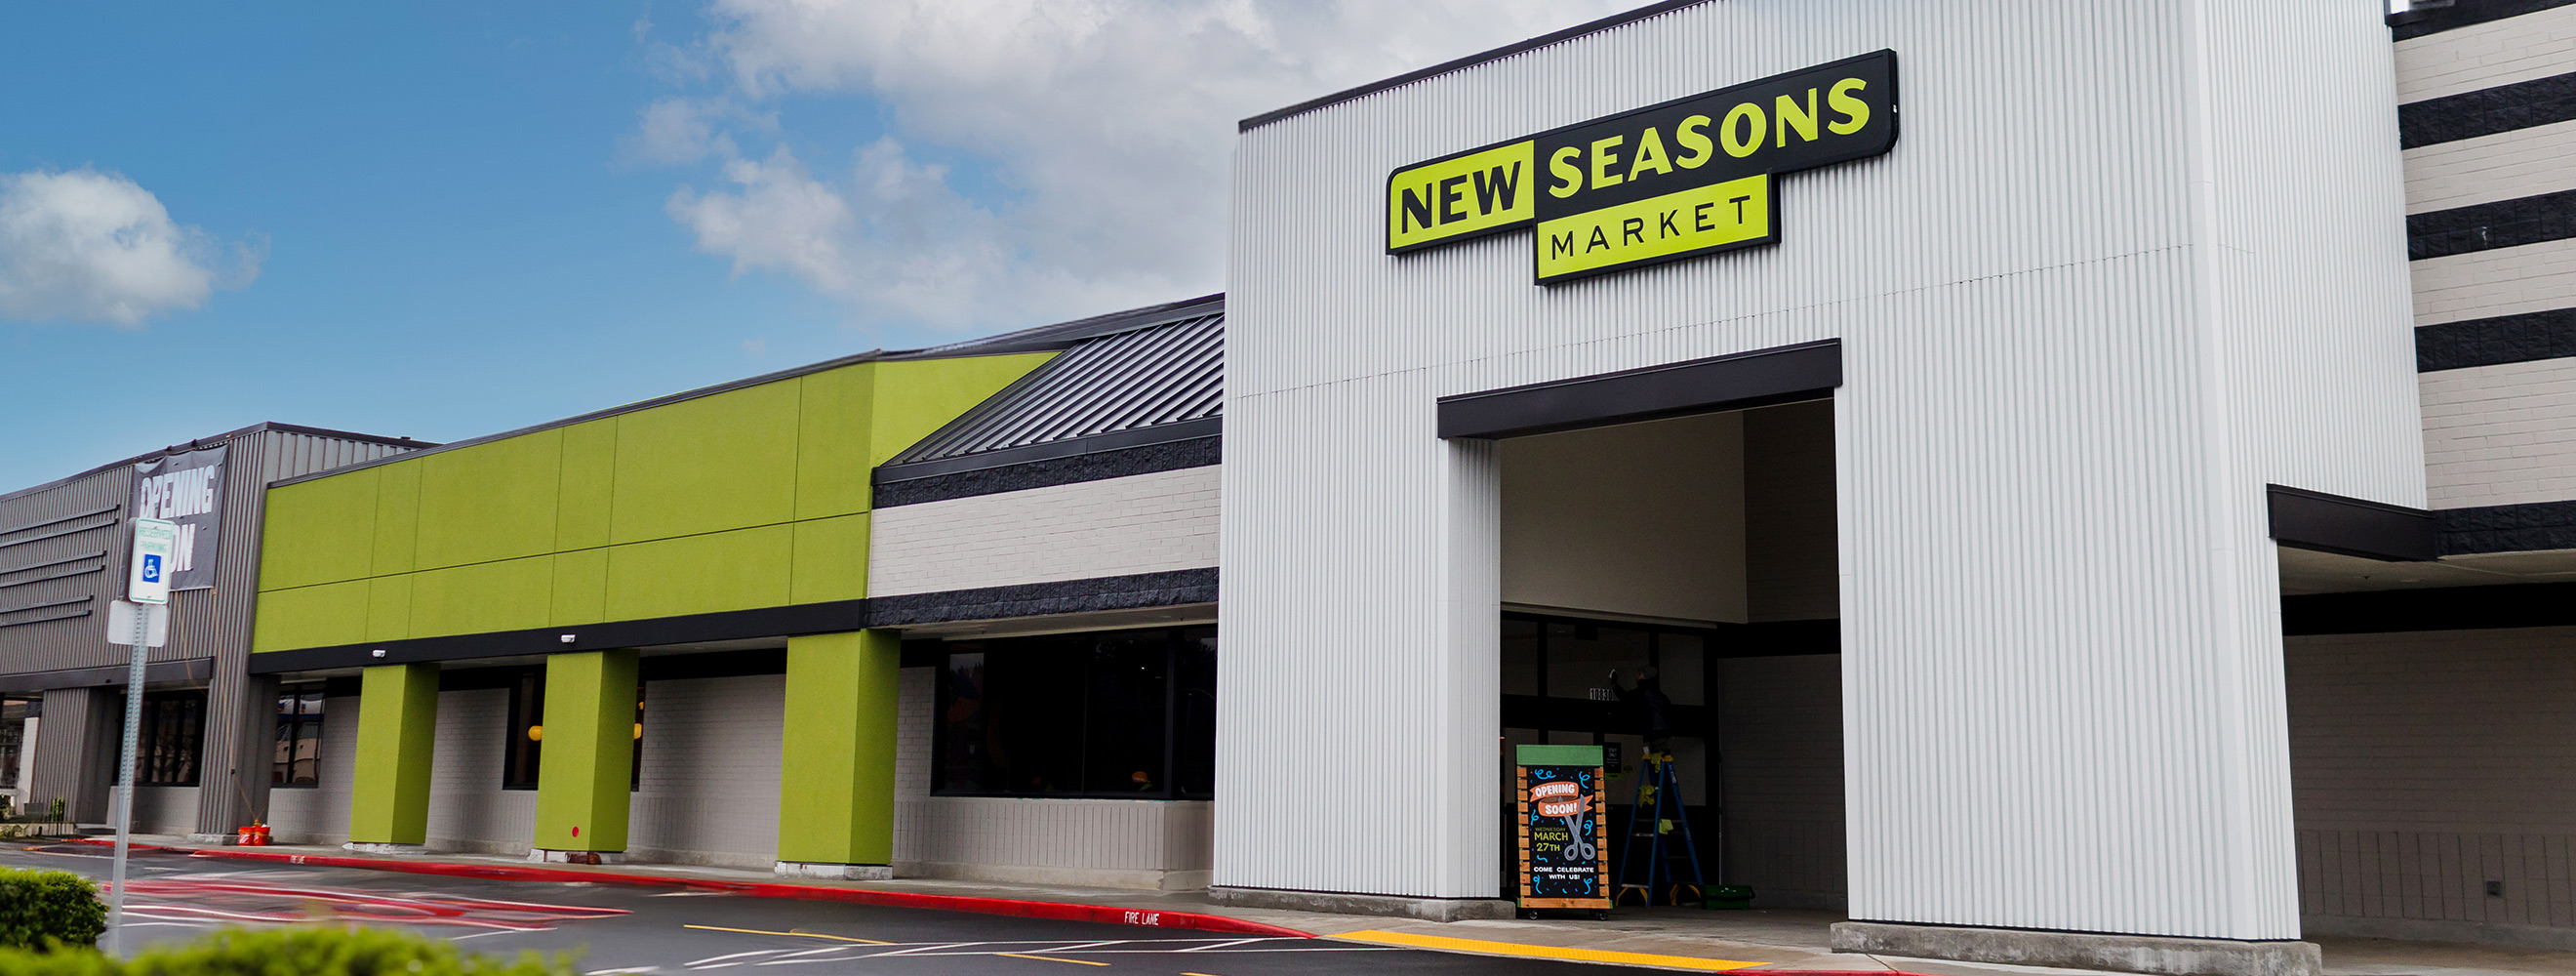 exterior shot of New Seasons Market Milwaukie store location.